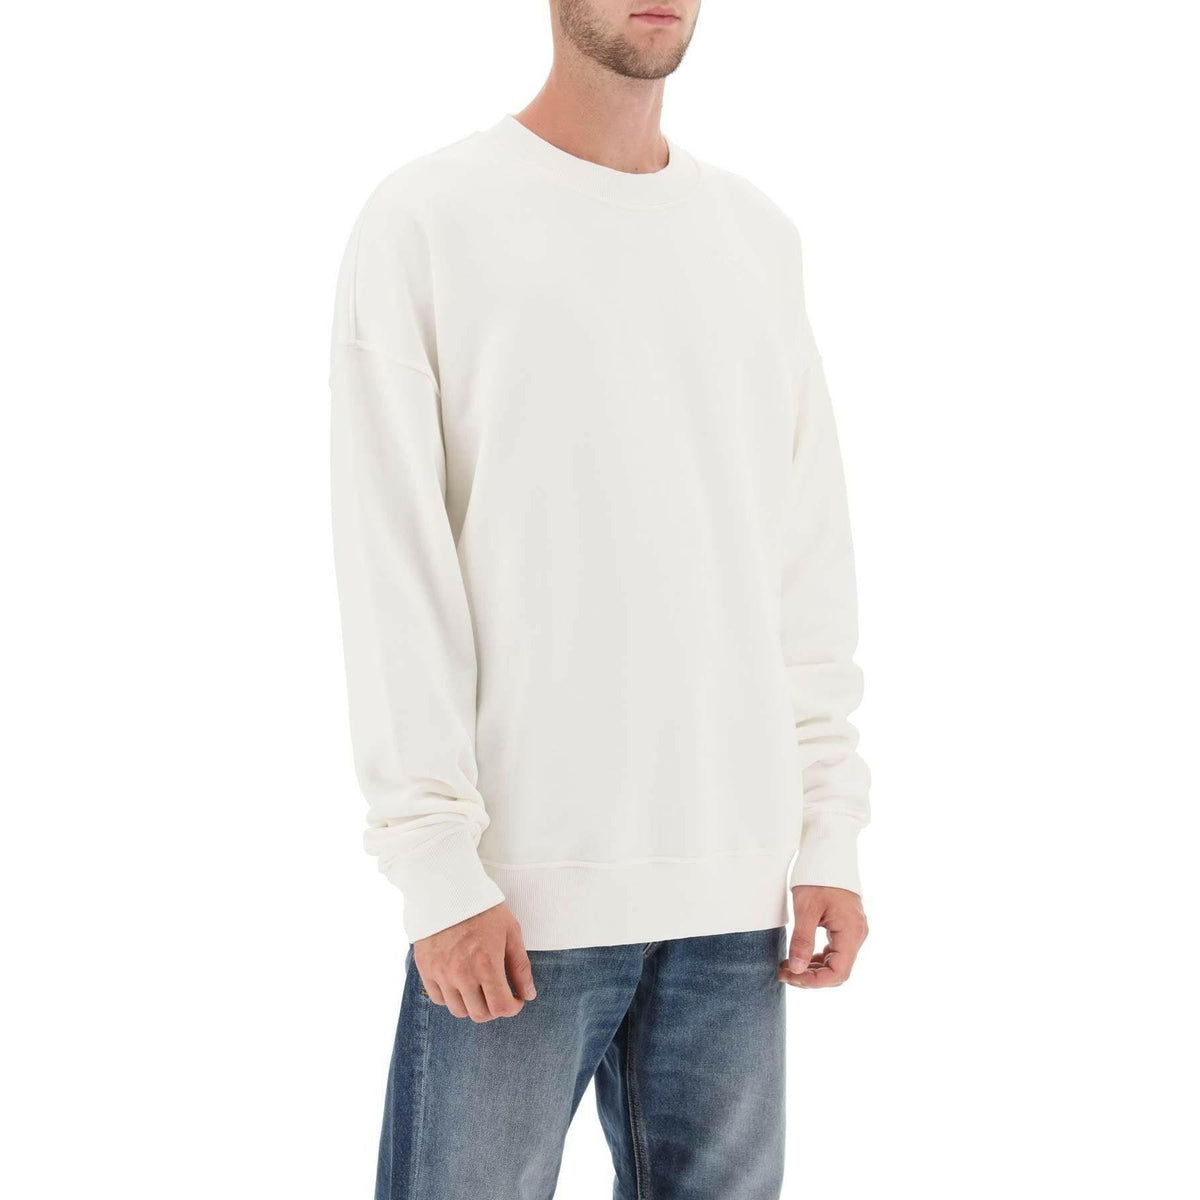 S Strapoval' Sweatshirt With Back Destroyed Effect Logo DIESEL JOHN JULIA.